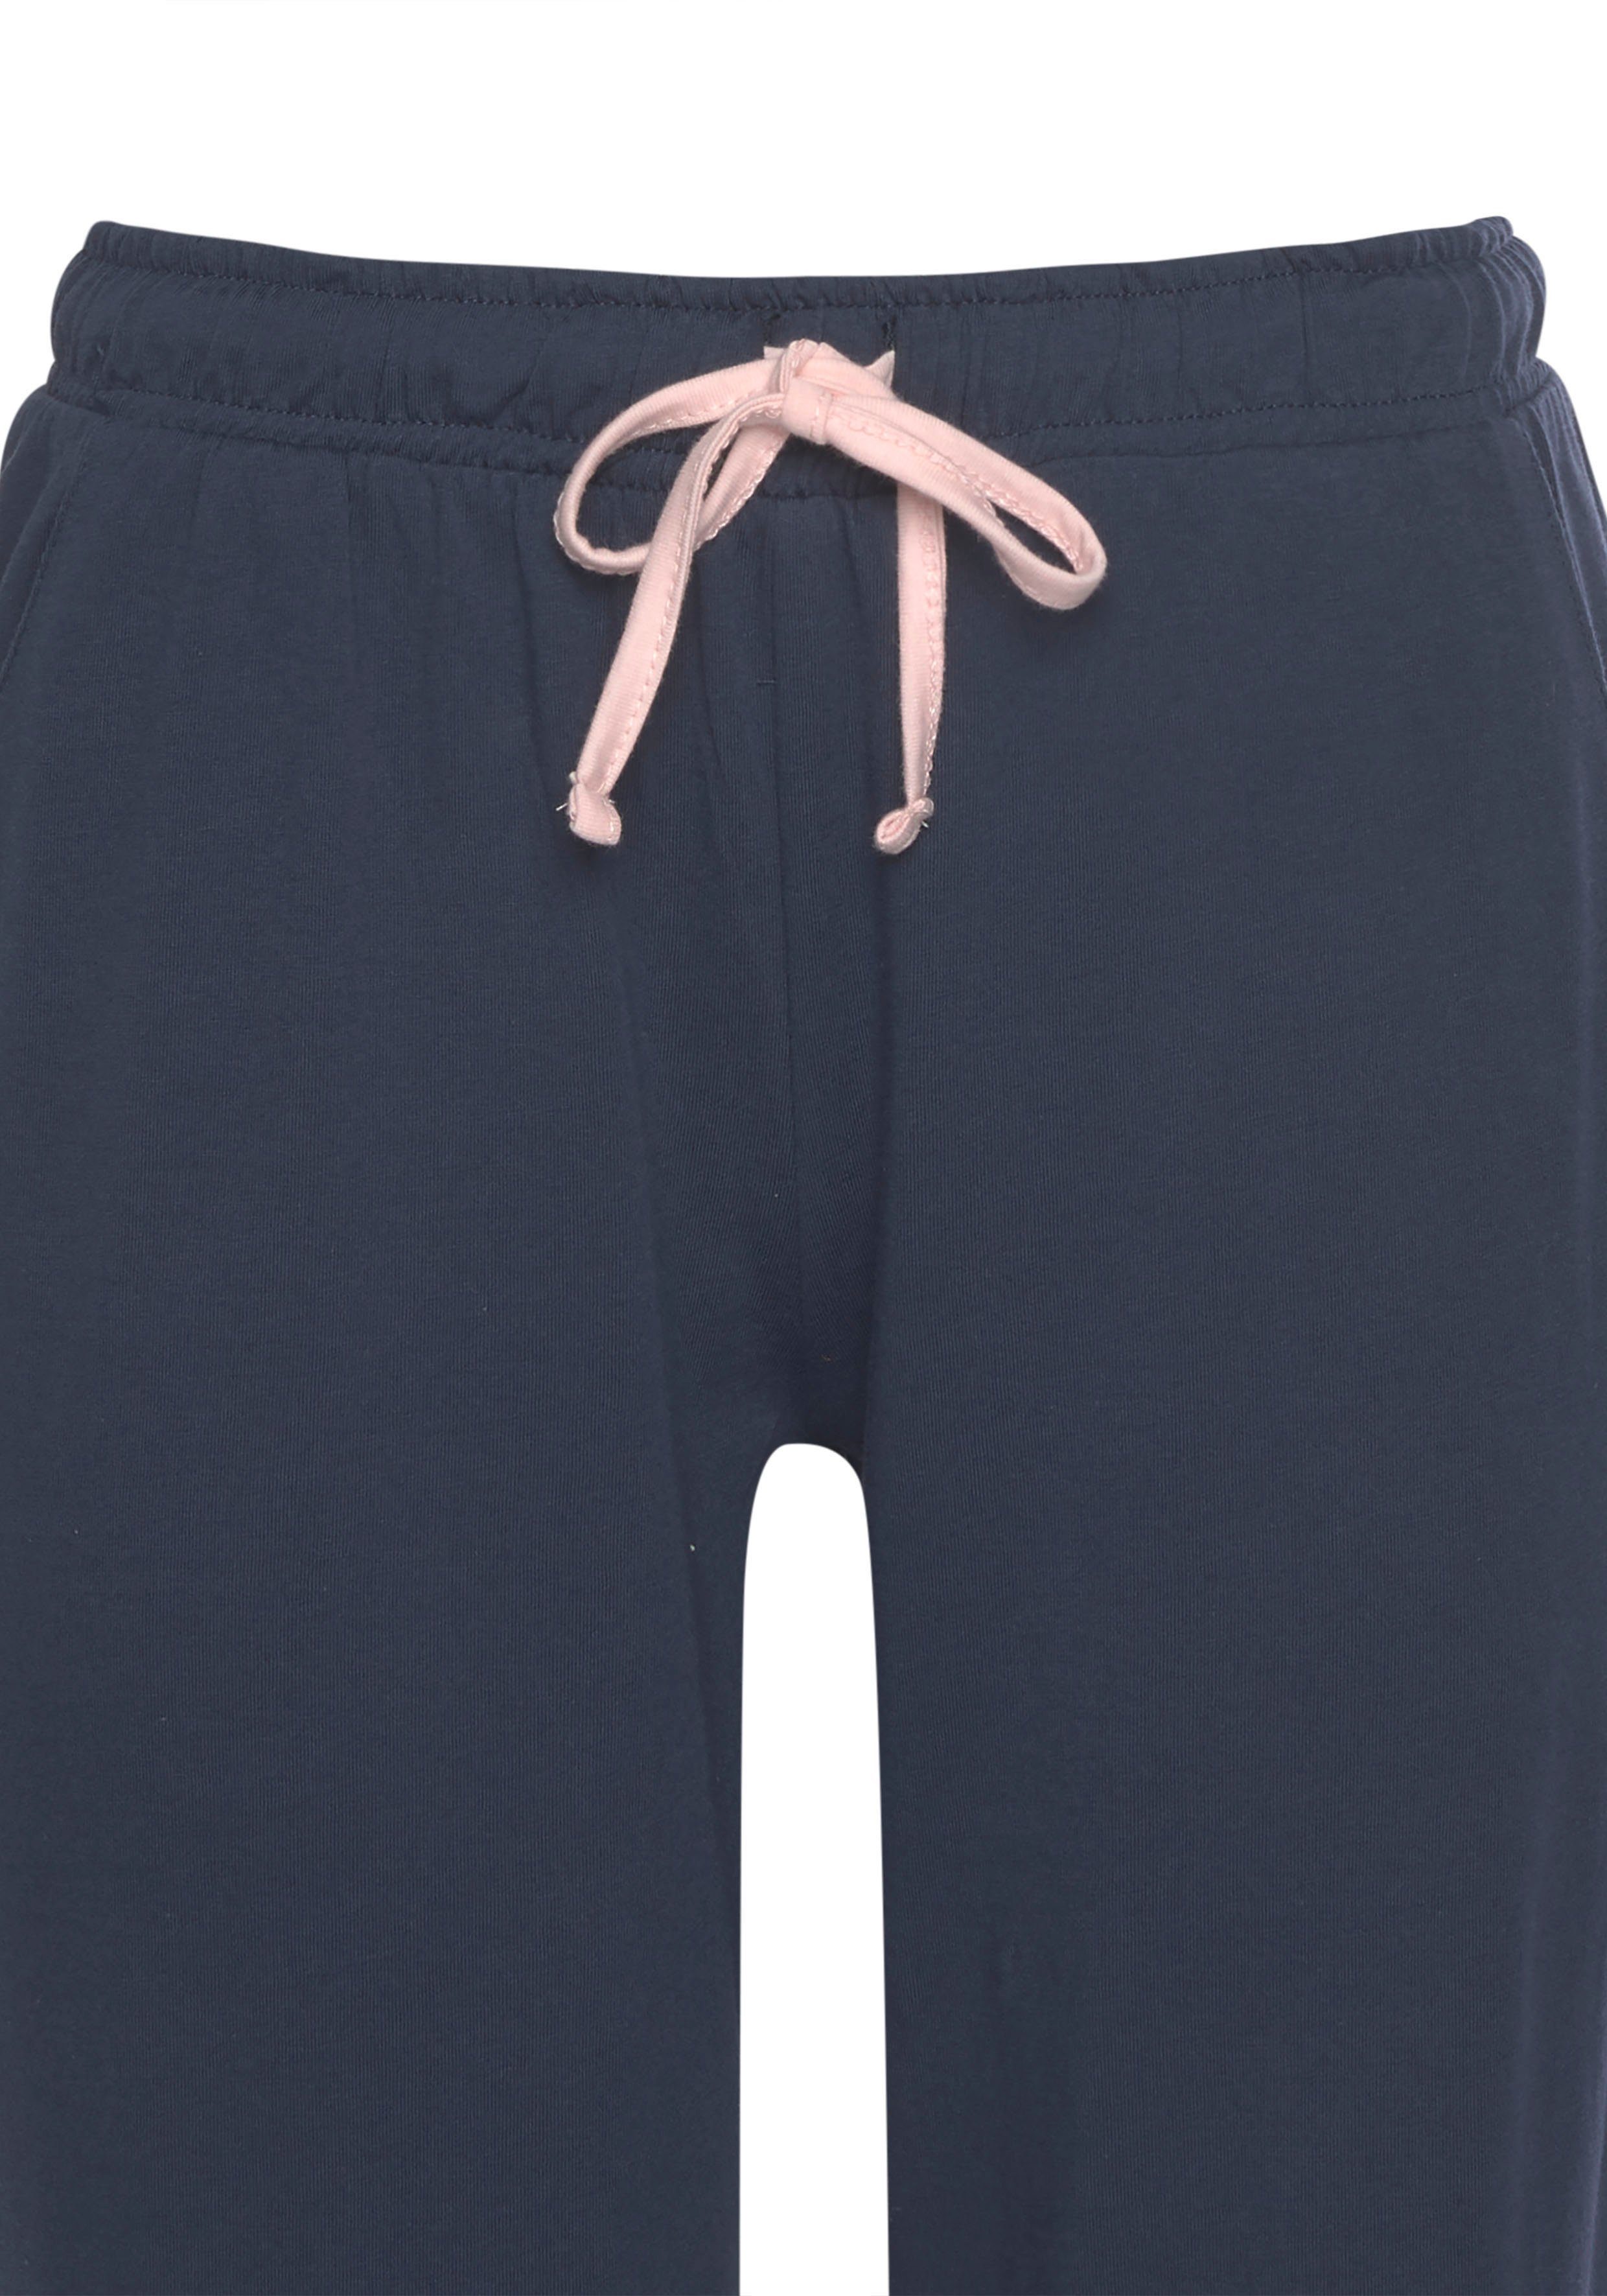 Raglanärmeln tlg., kontrastfarbenen 1 (2 mit KangaROOS Stück) rosa-dunkelblau Pyjama